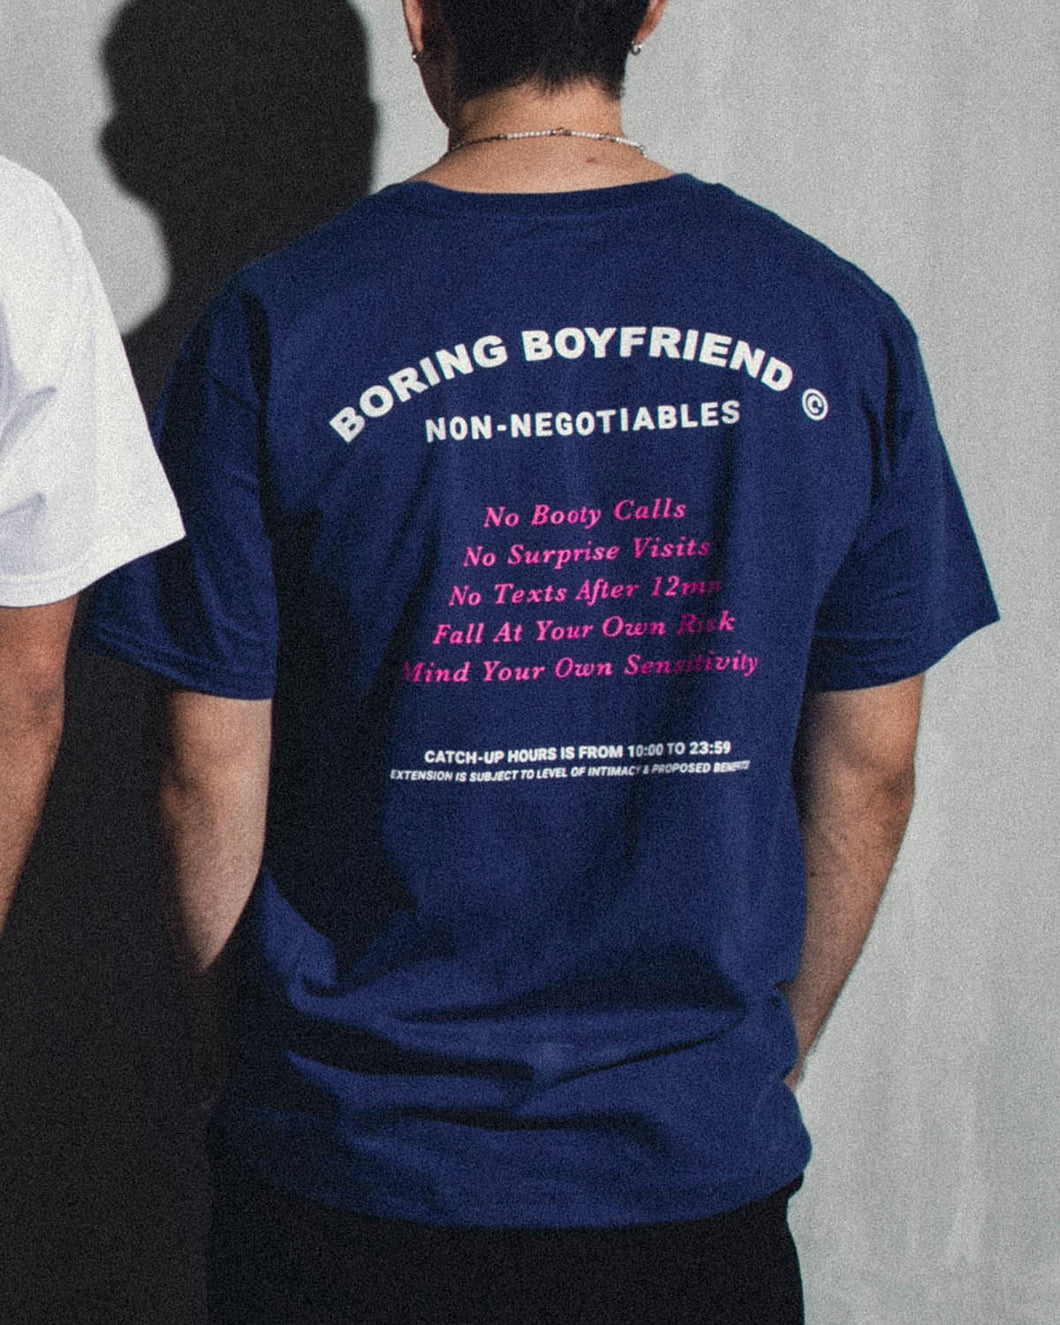 Non-Negotiables Boyfriend Shirt in Cobalt